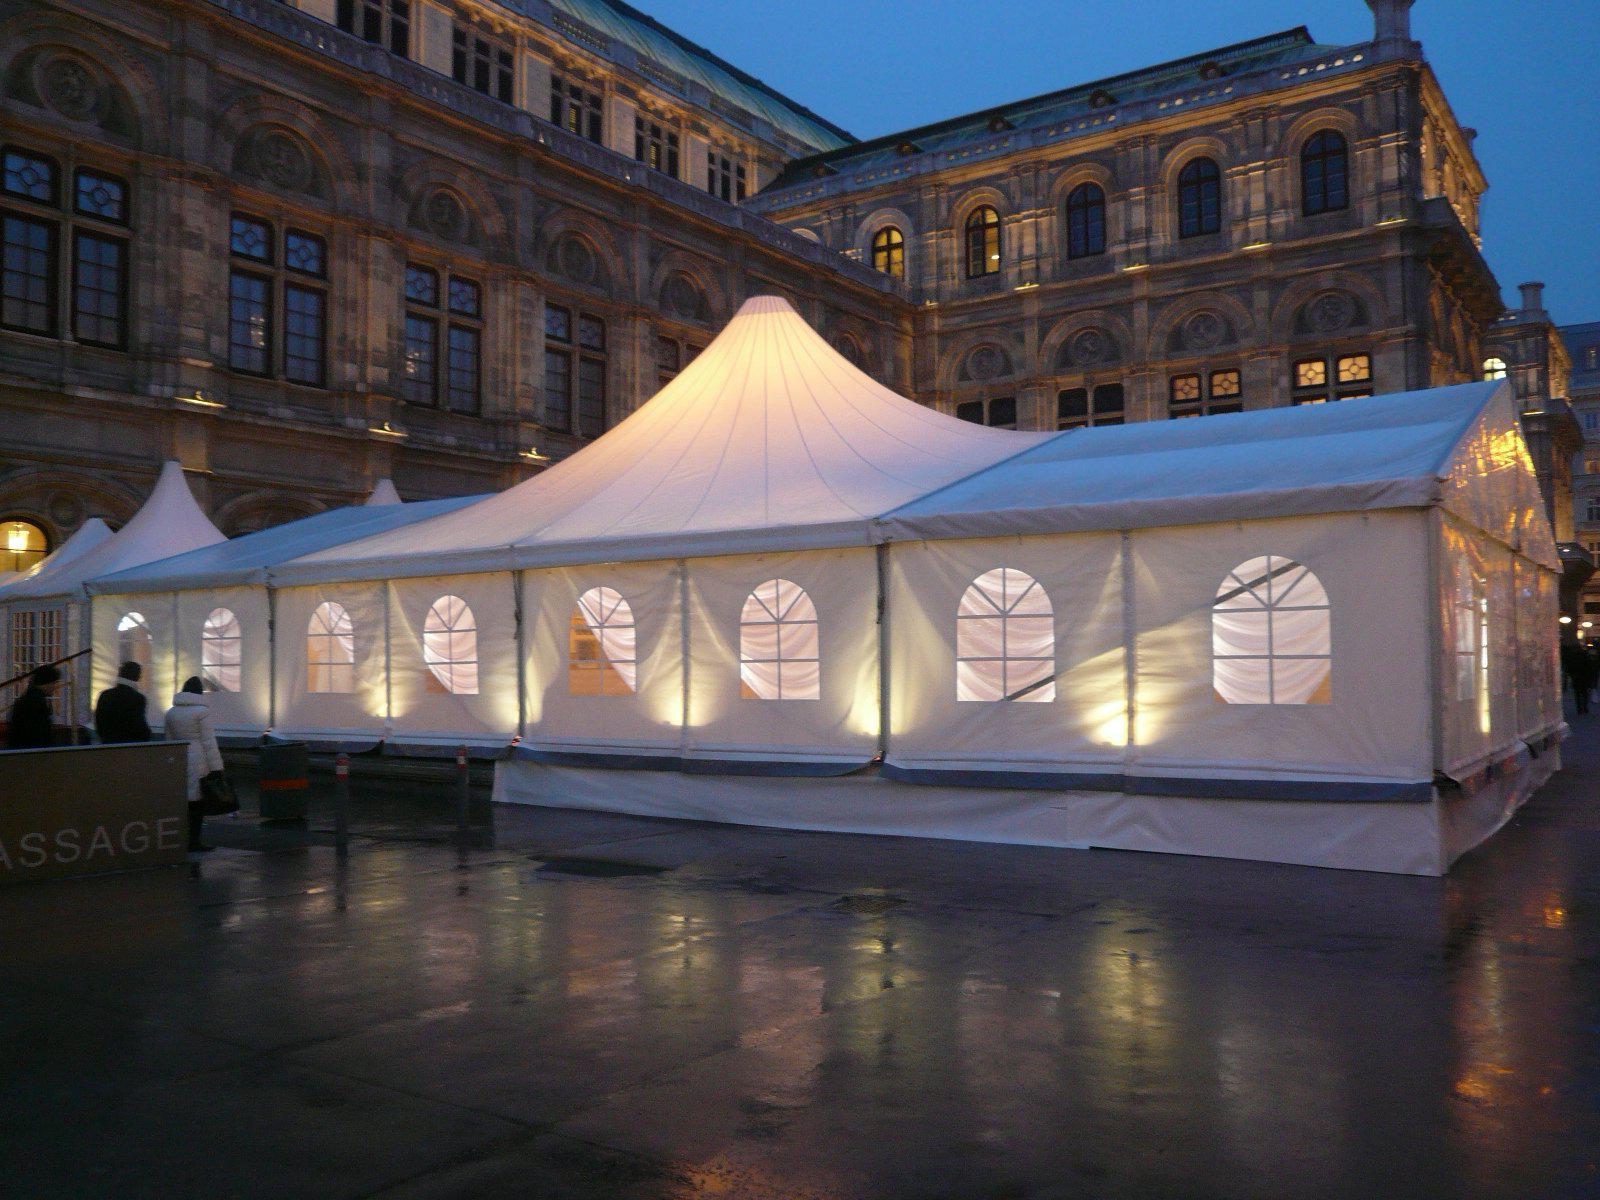 Bilder RenT A TenT Eventservice GmbH